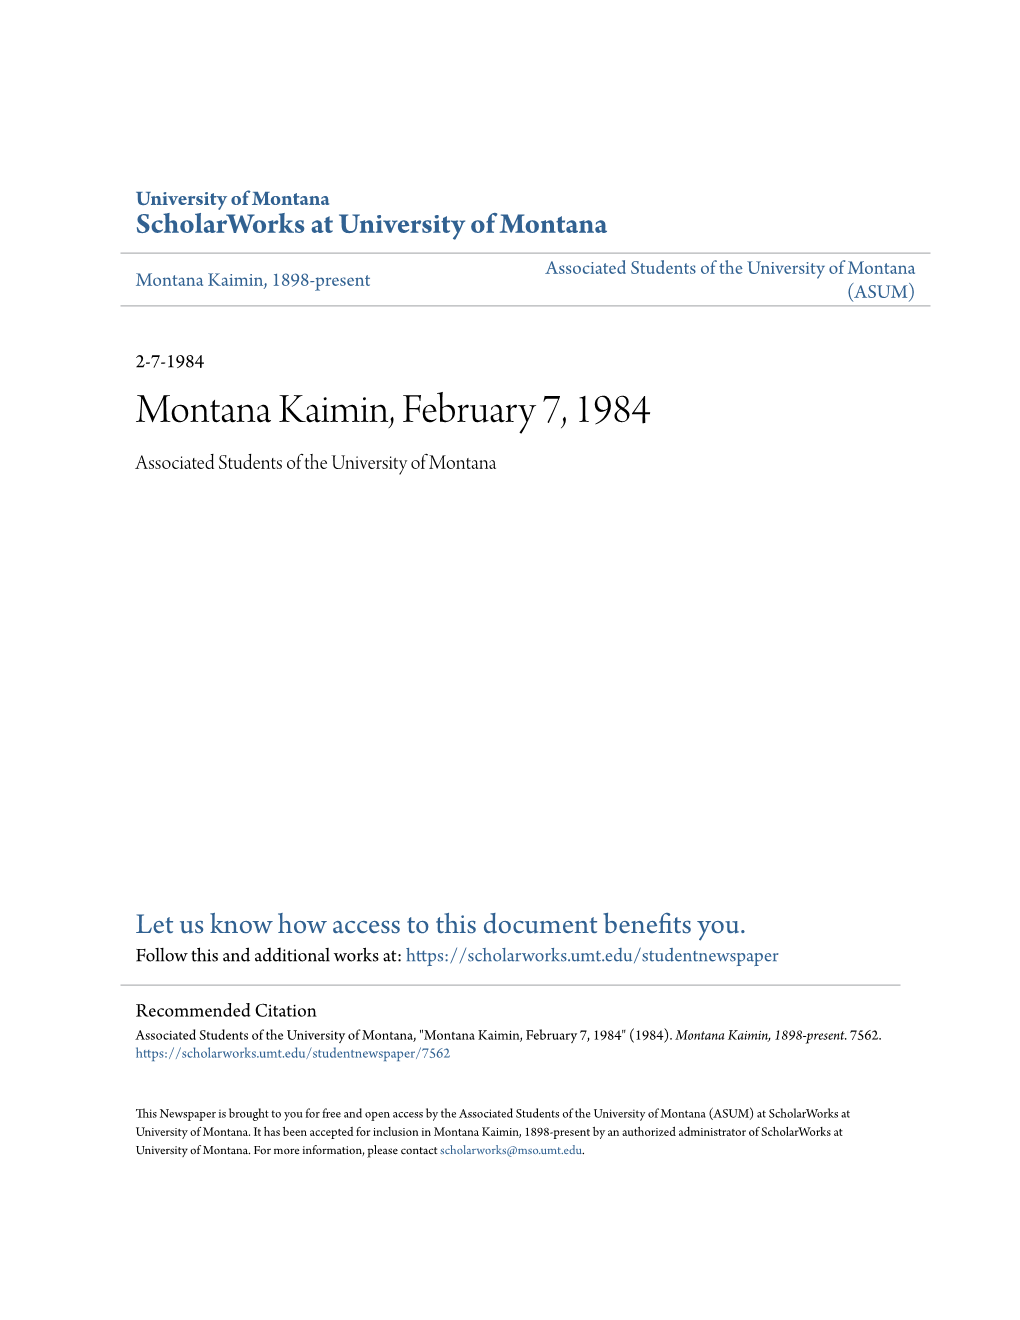 Montana Kaimin, February 7, 1984 Associated Students of the University of Montana